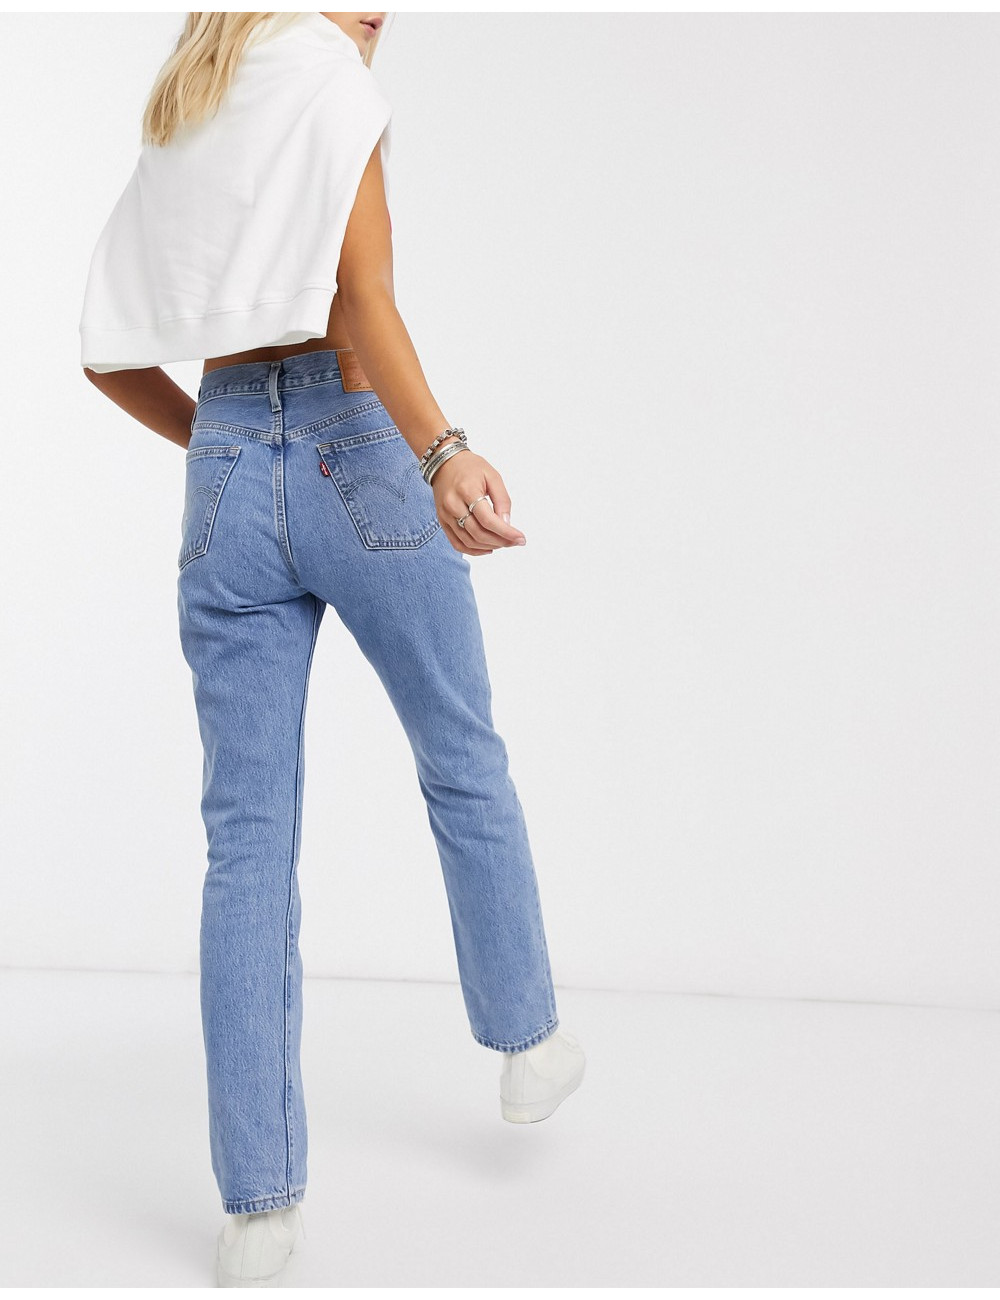 Levi's 501 original jeans...